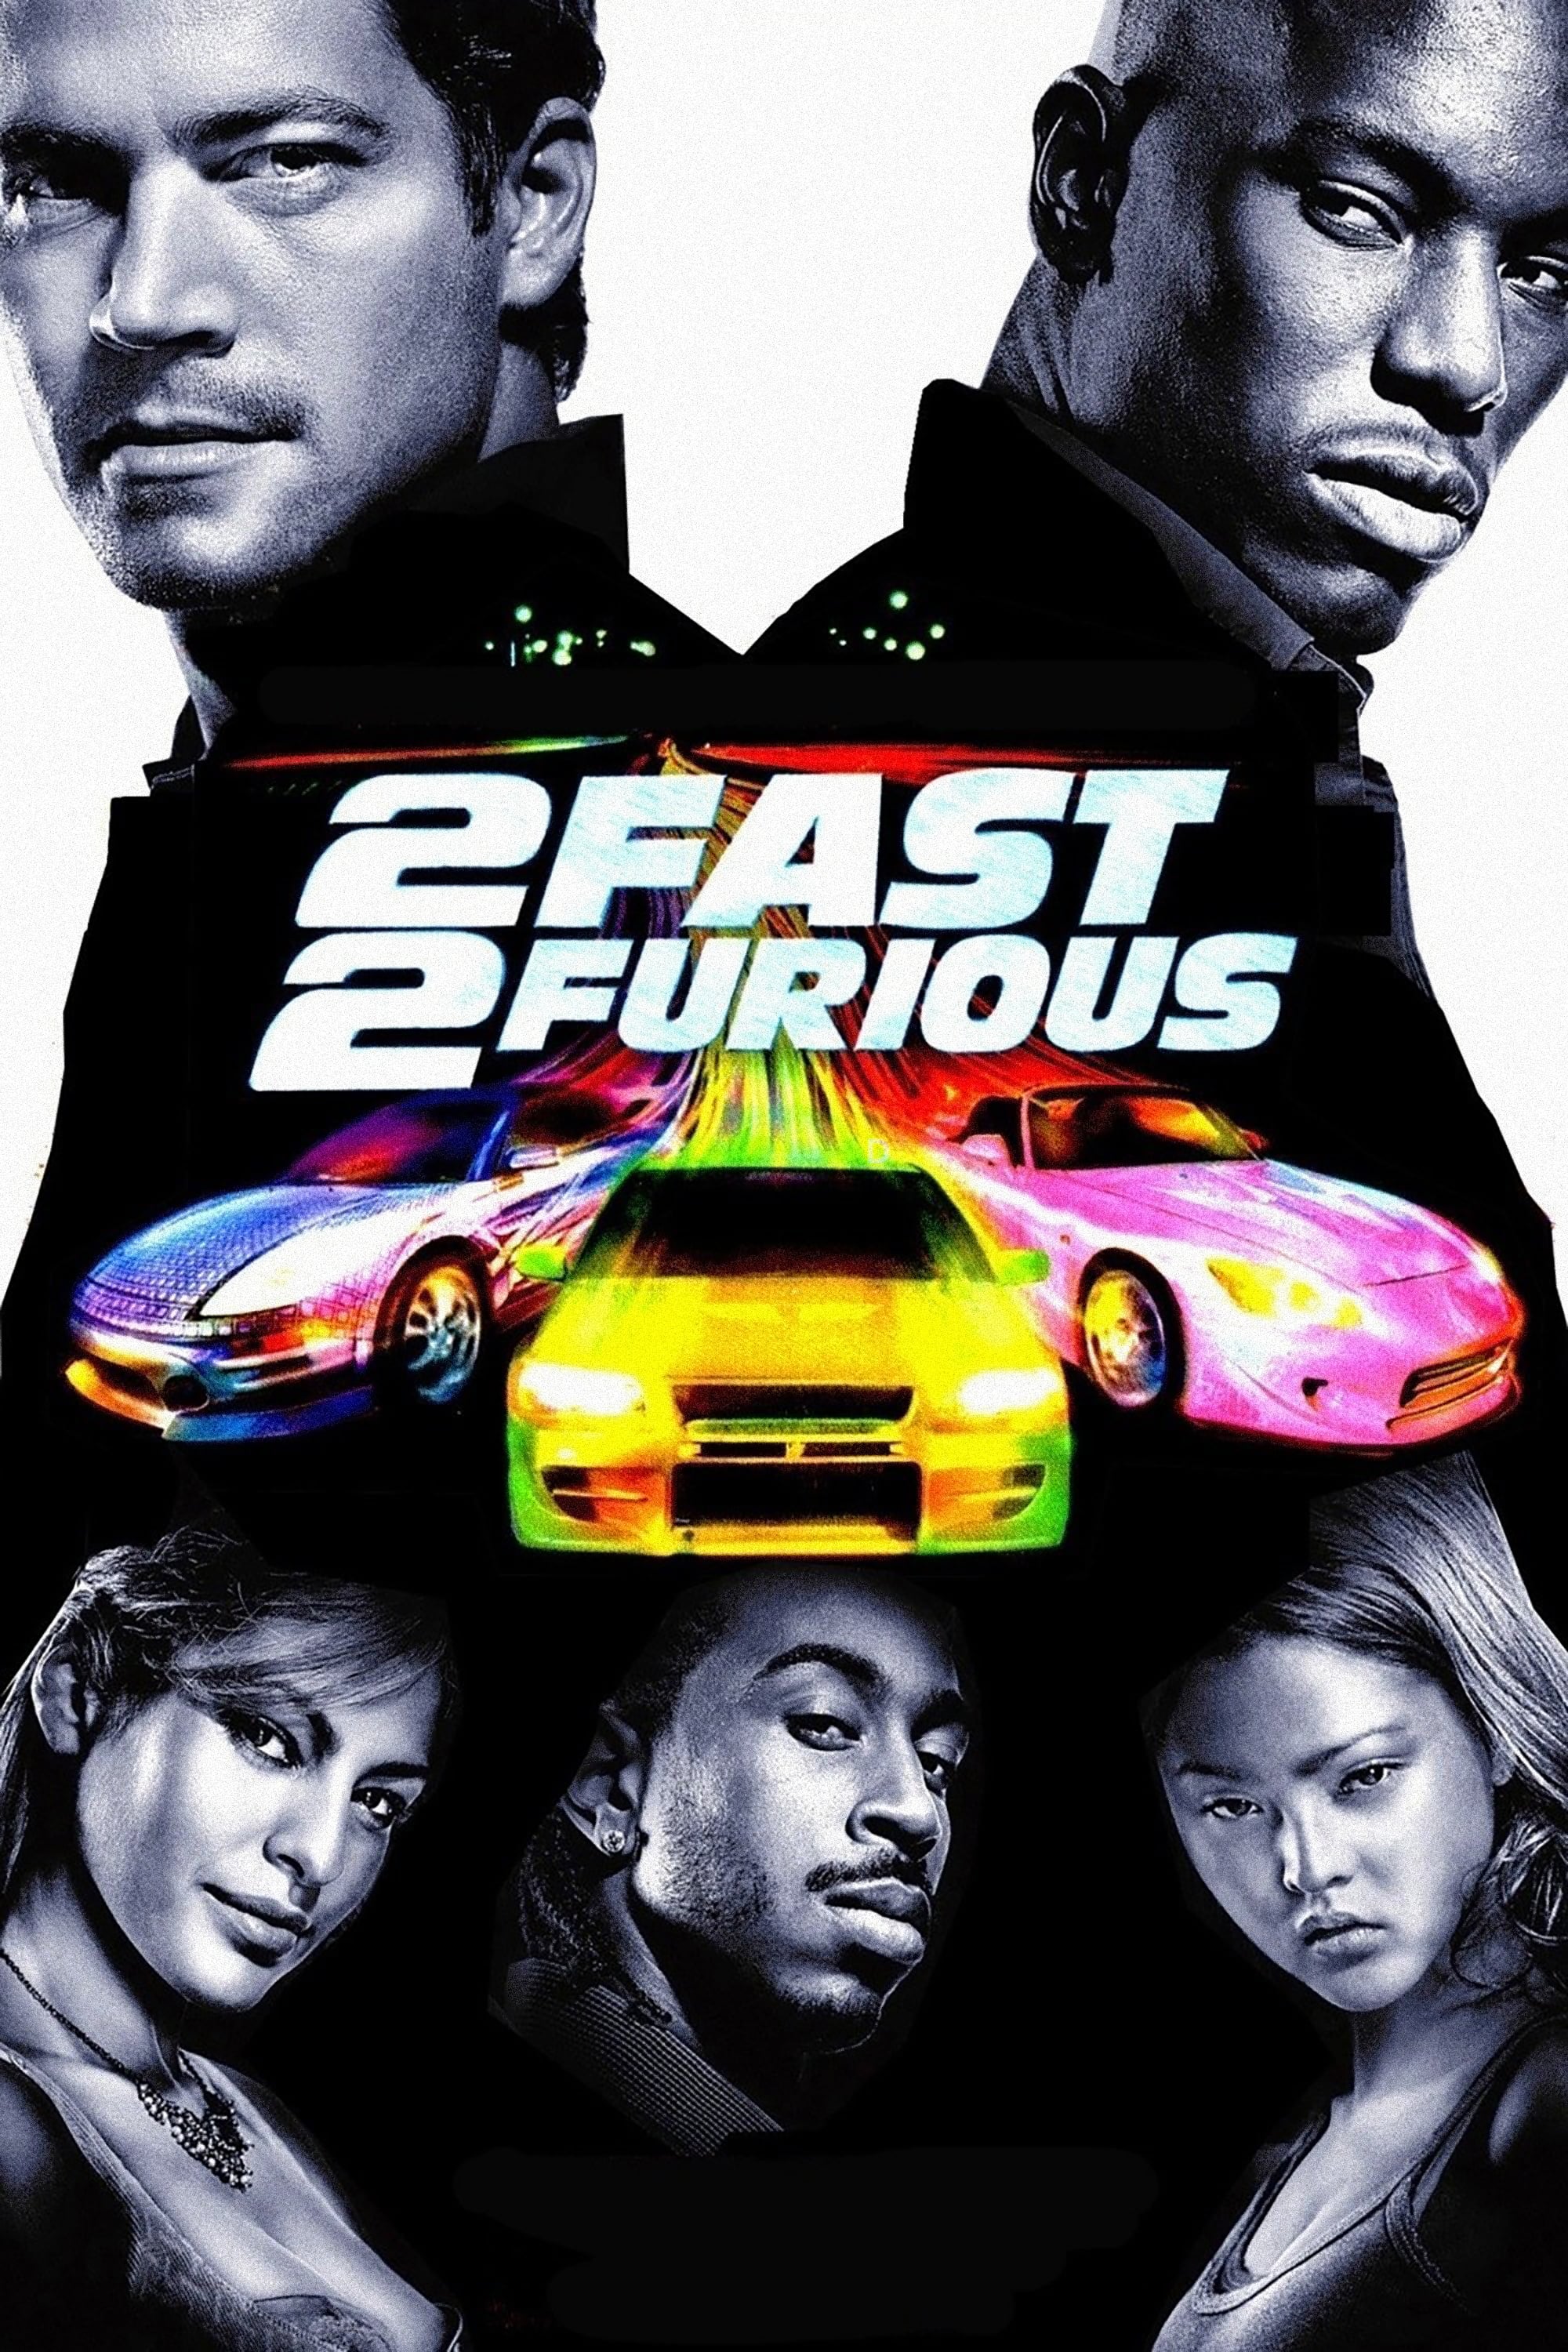 Fastcast - 02 - 2 Fast 2 Furious (2003)